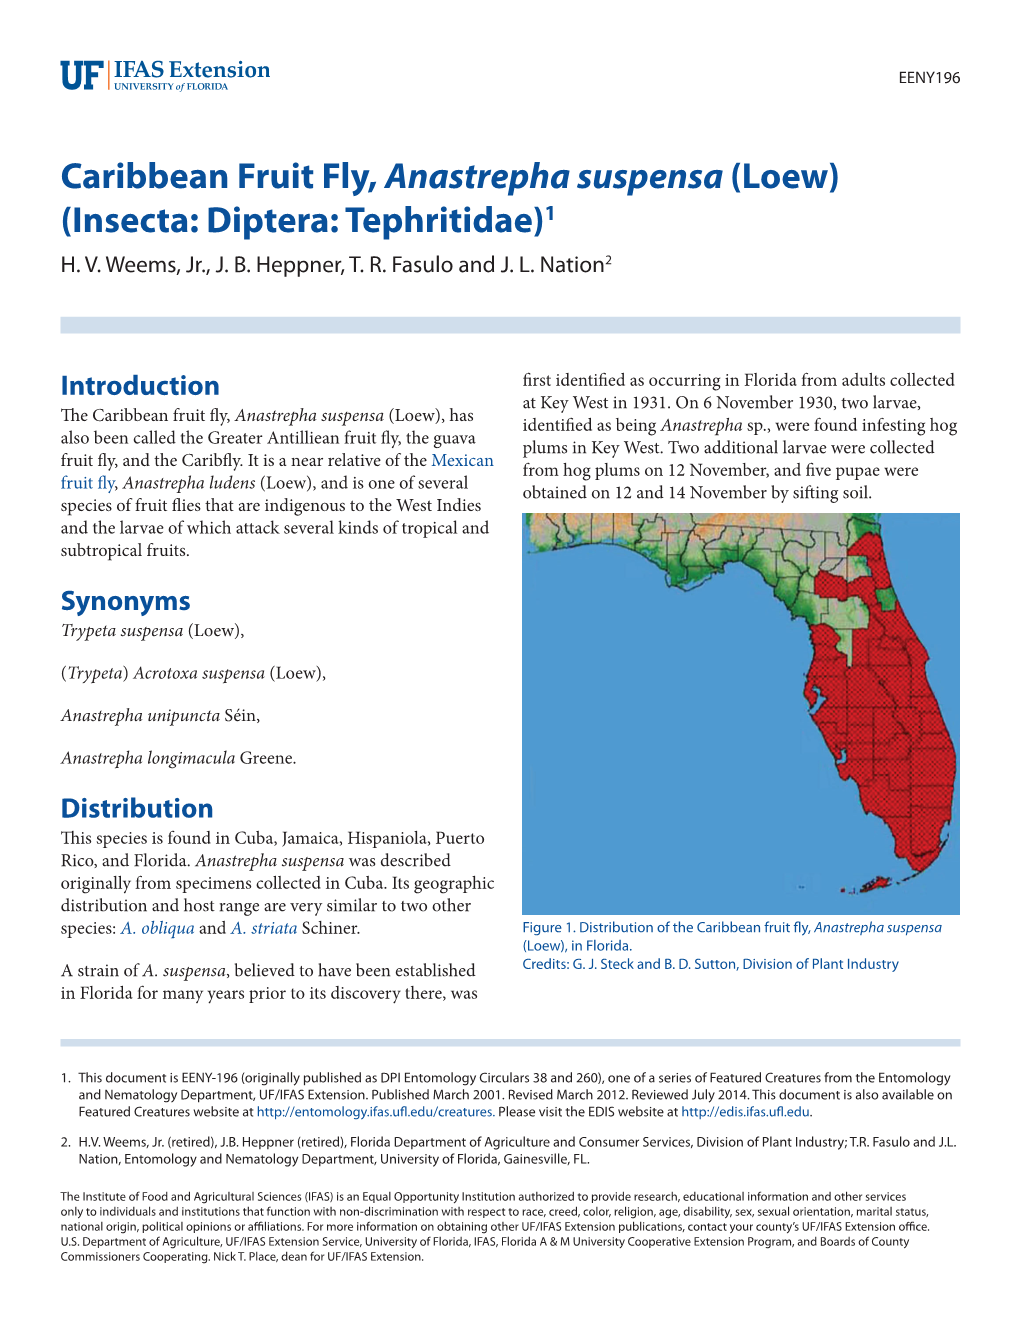 Caribbean Fruit Fly, Anastrepha Suspensa (Loew) (Insecta: Diptera: Tephritidae)1 H